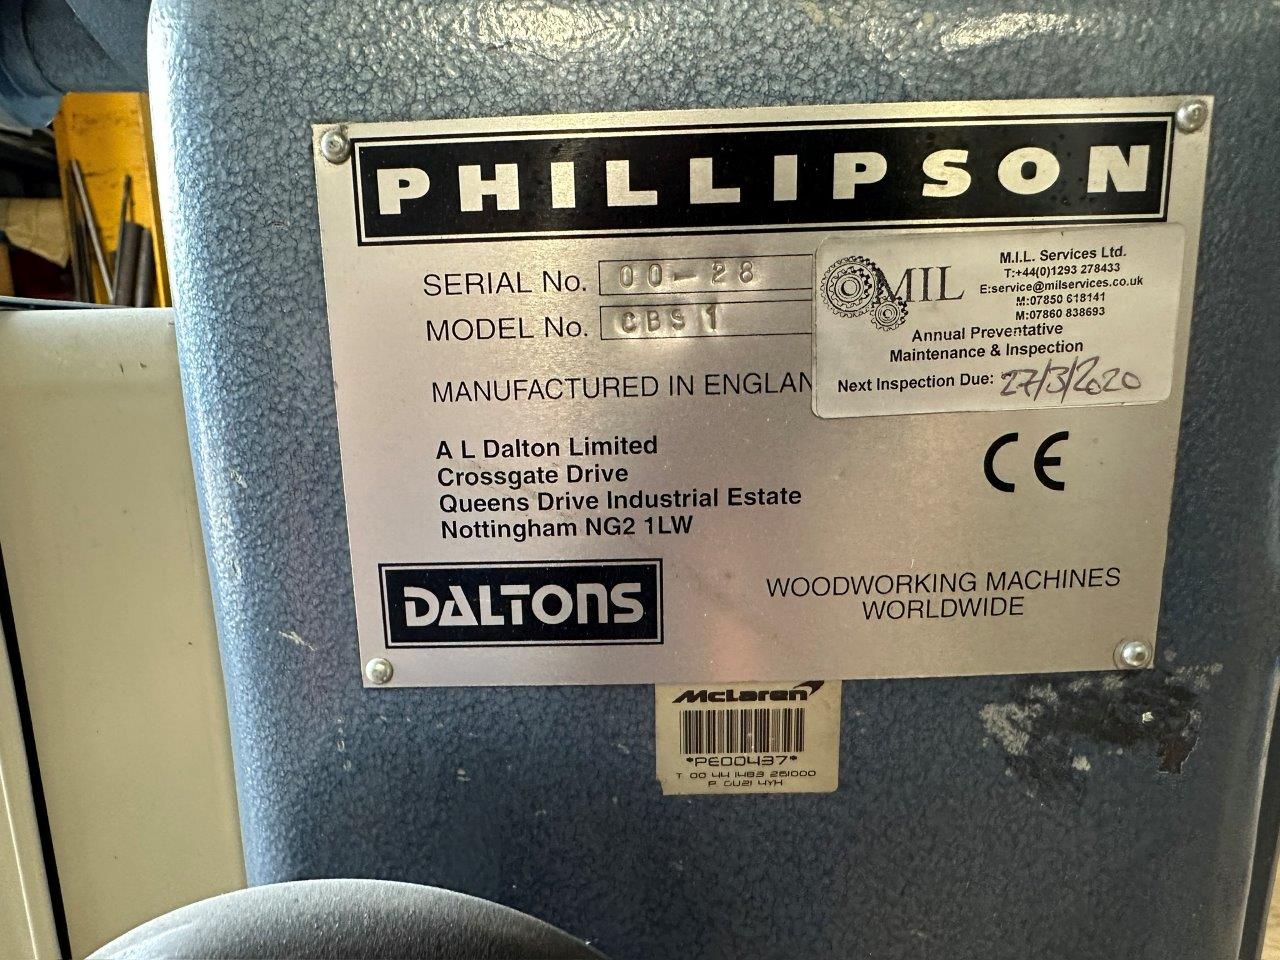 Woodworking Machinery/Phillipson Contour Belt Sander, Model CBS1 (4380)